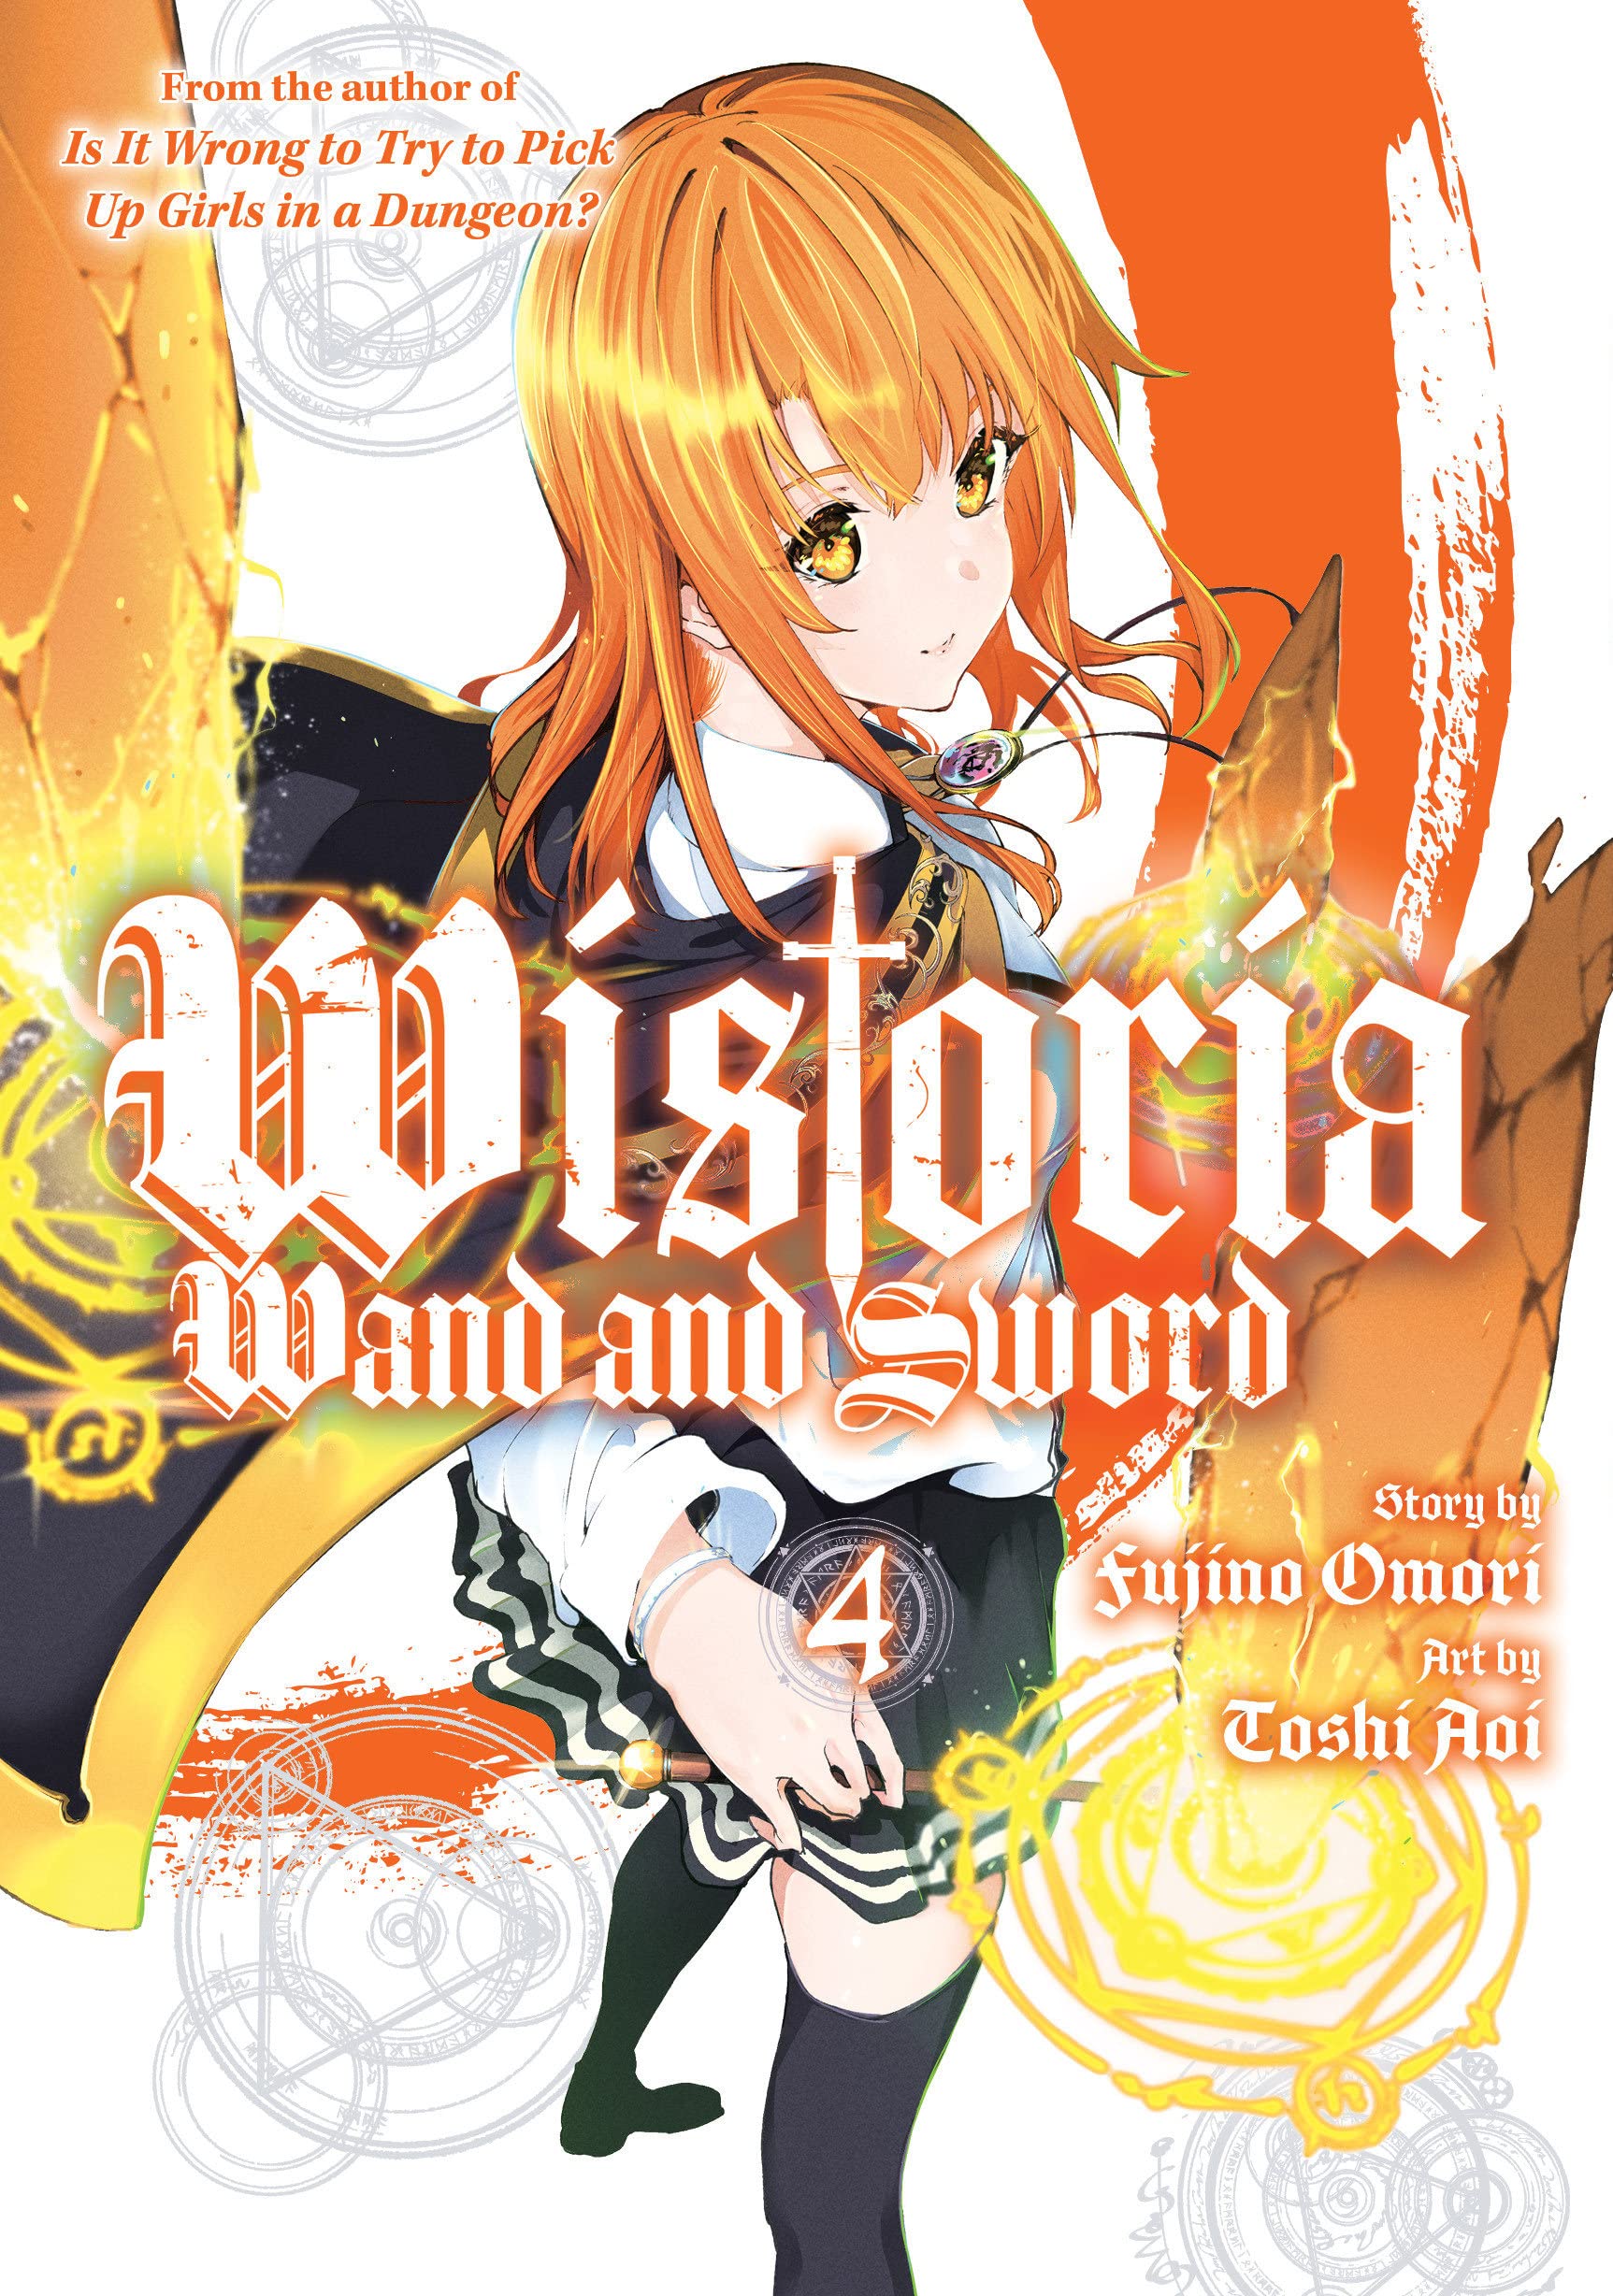 Wistoria: Wand and Sword Vol. 04